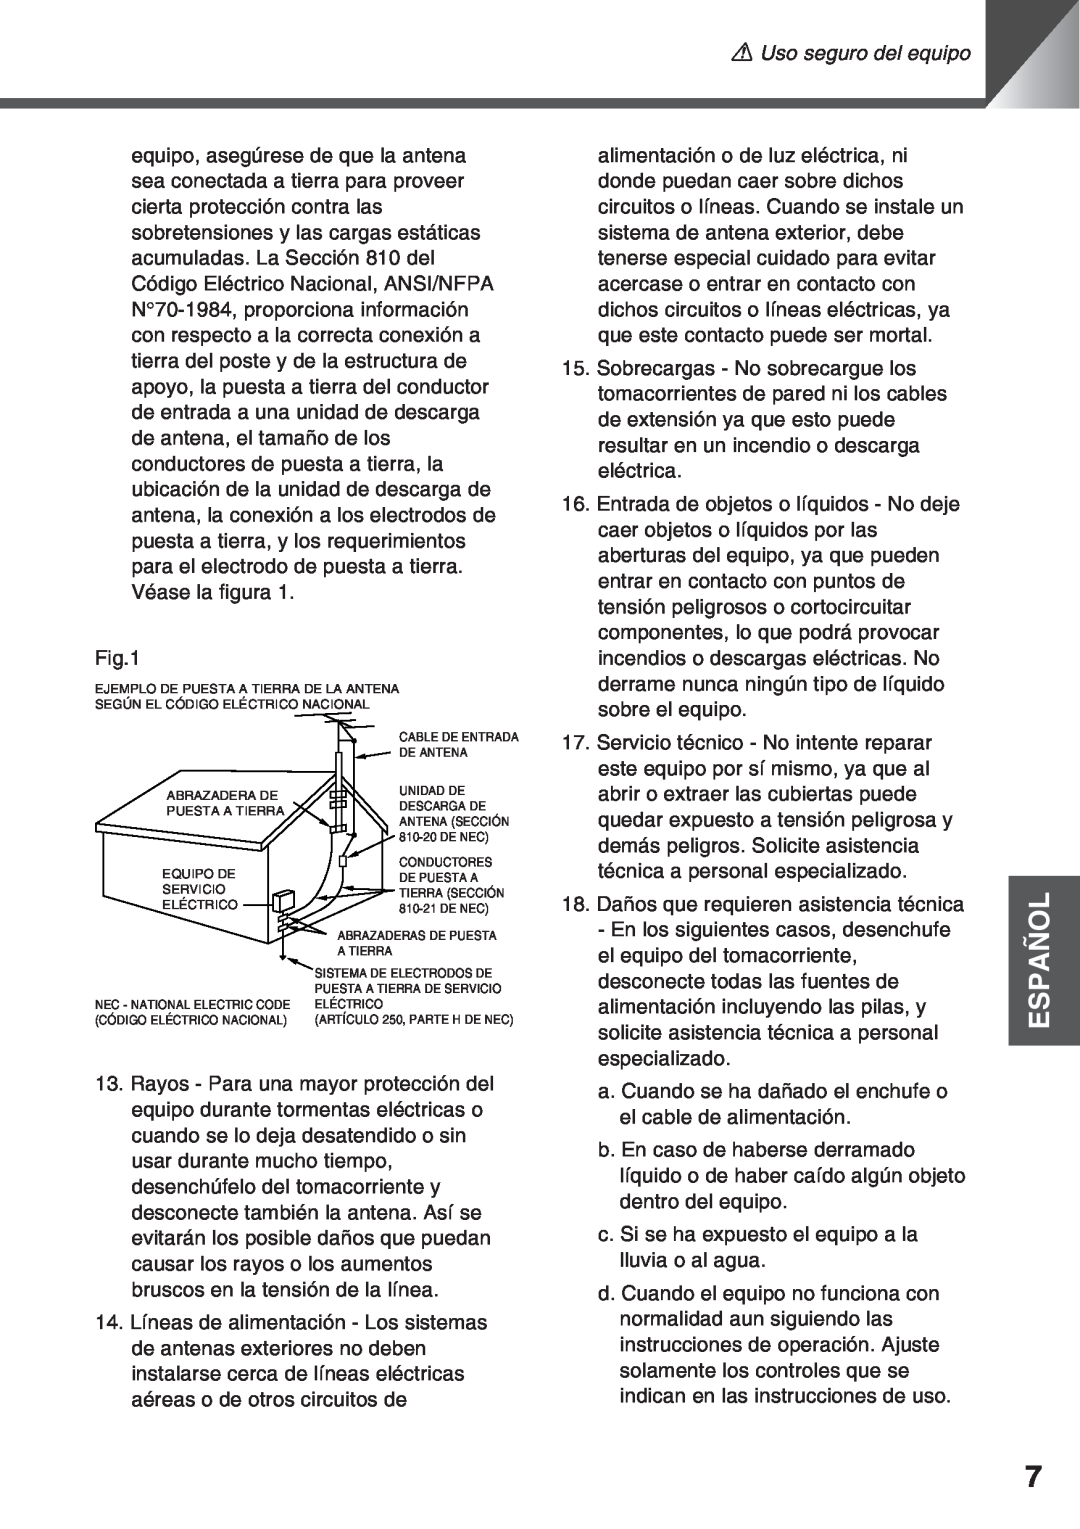 Canon VC-C50IR, VC-C50i instruction manual Español, aUso seguro del equipo 